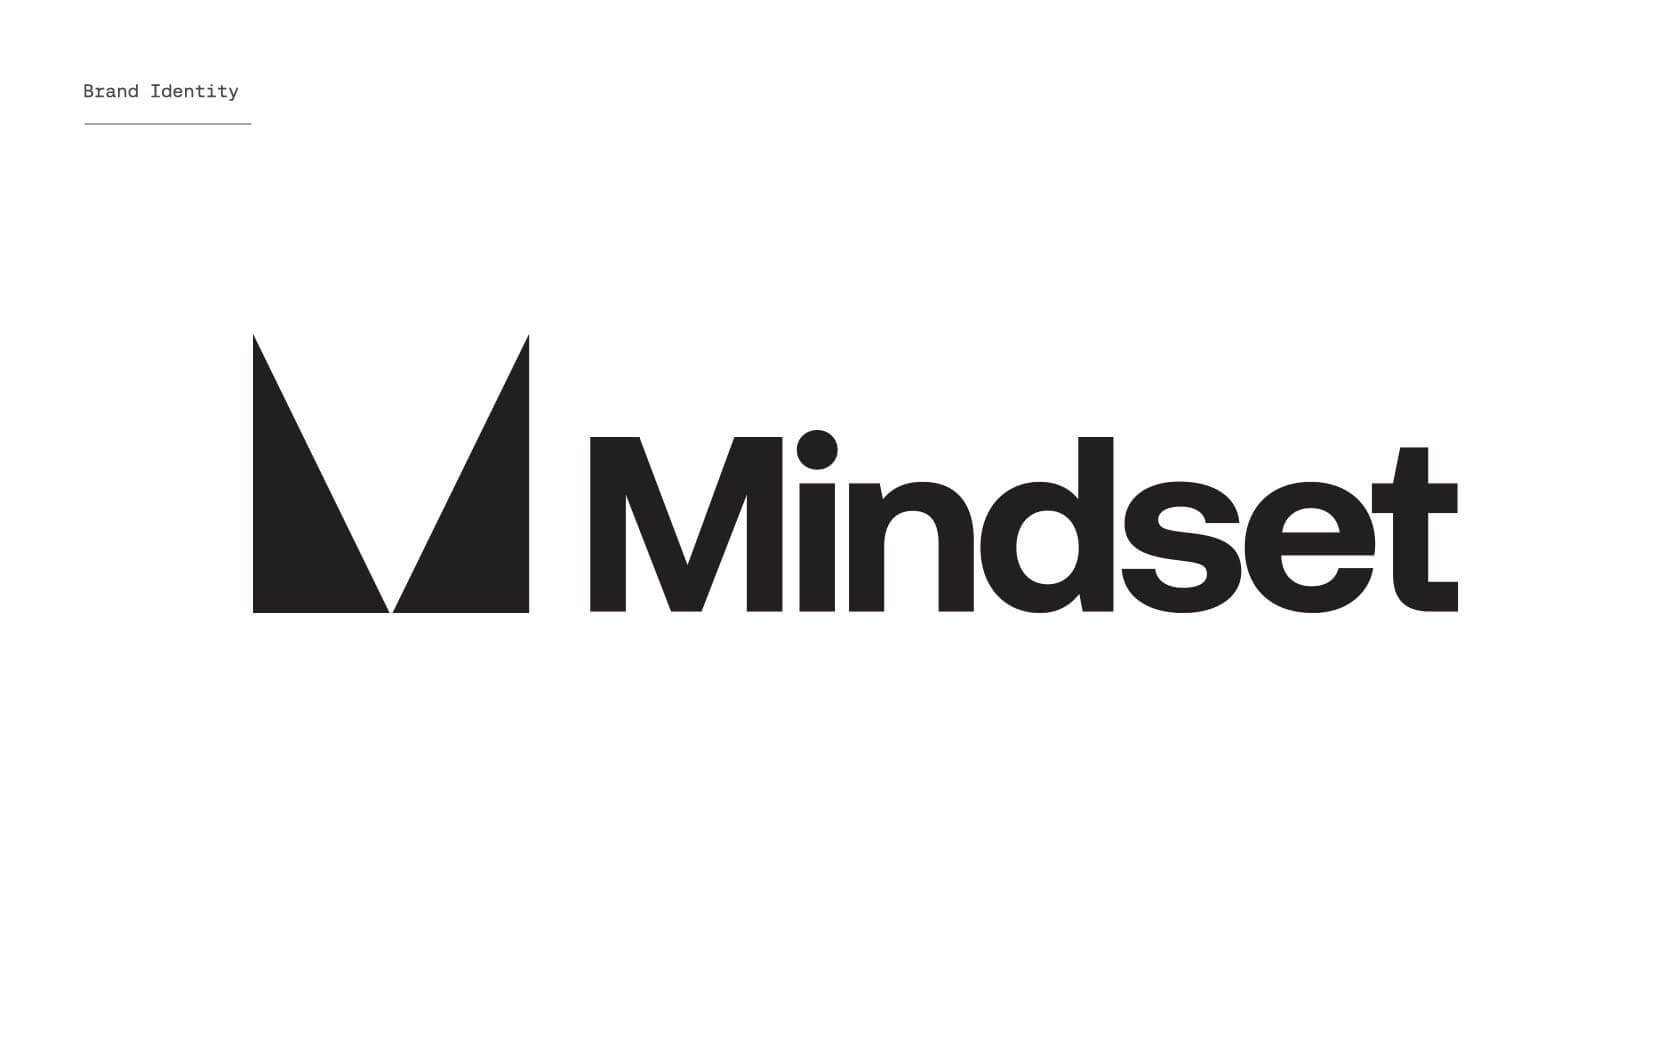 Mindset. Brand logo in black